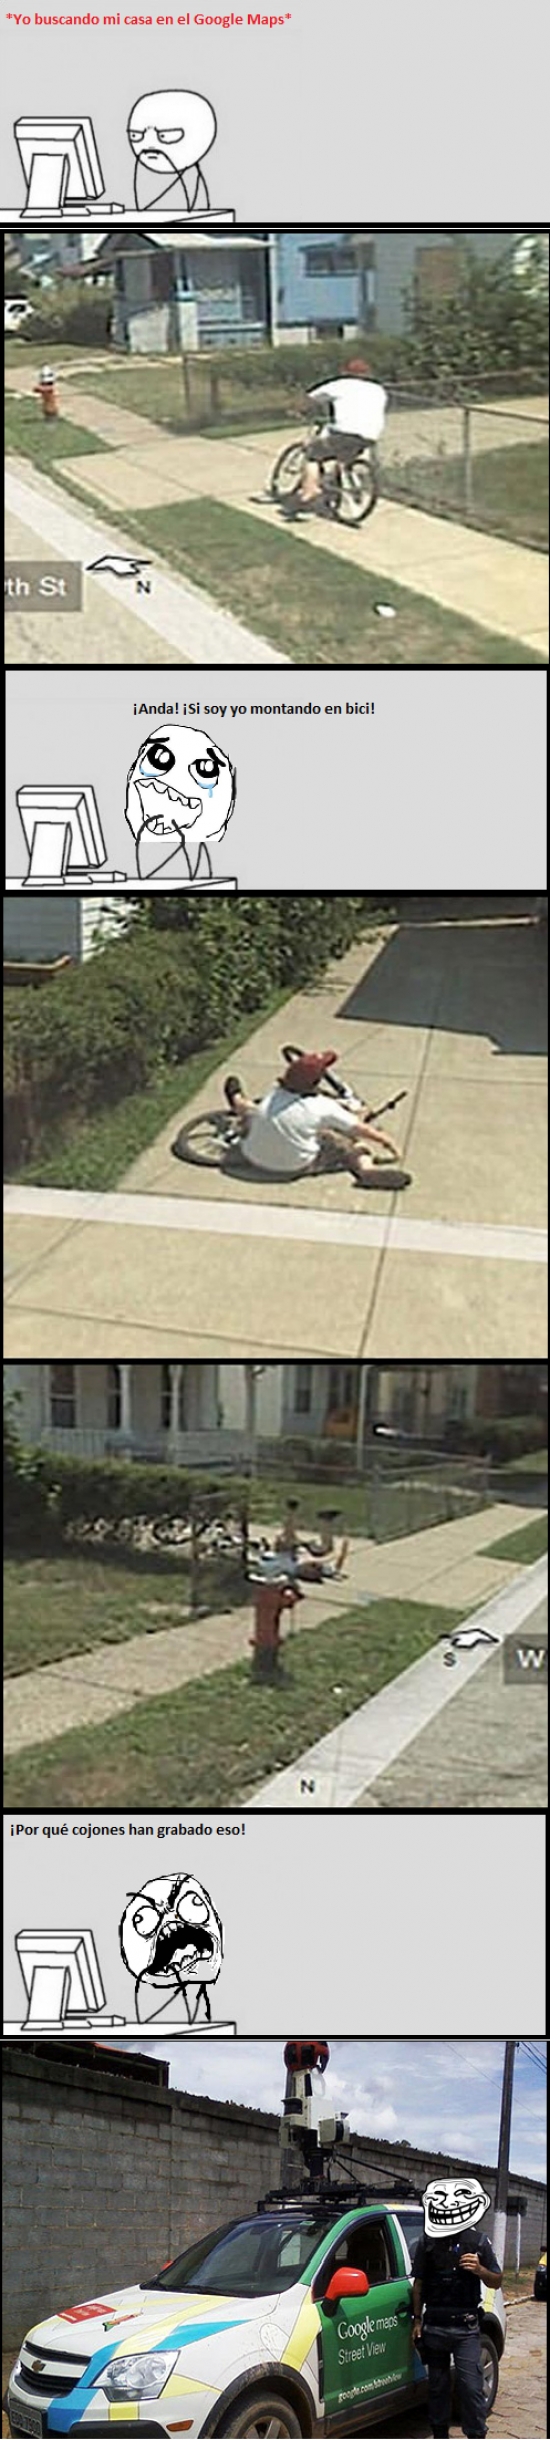 bici,bicicleta,caida,coche,foto,google maps,street view,trollface